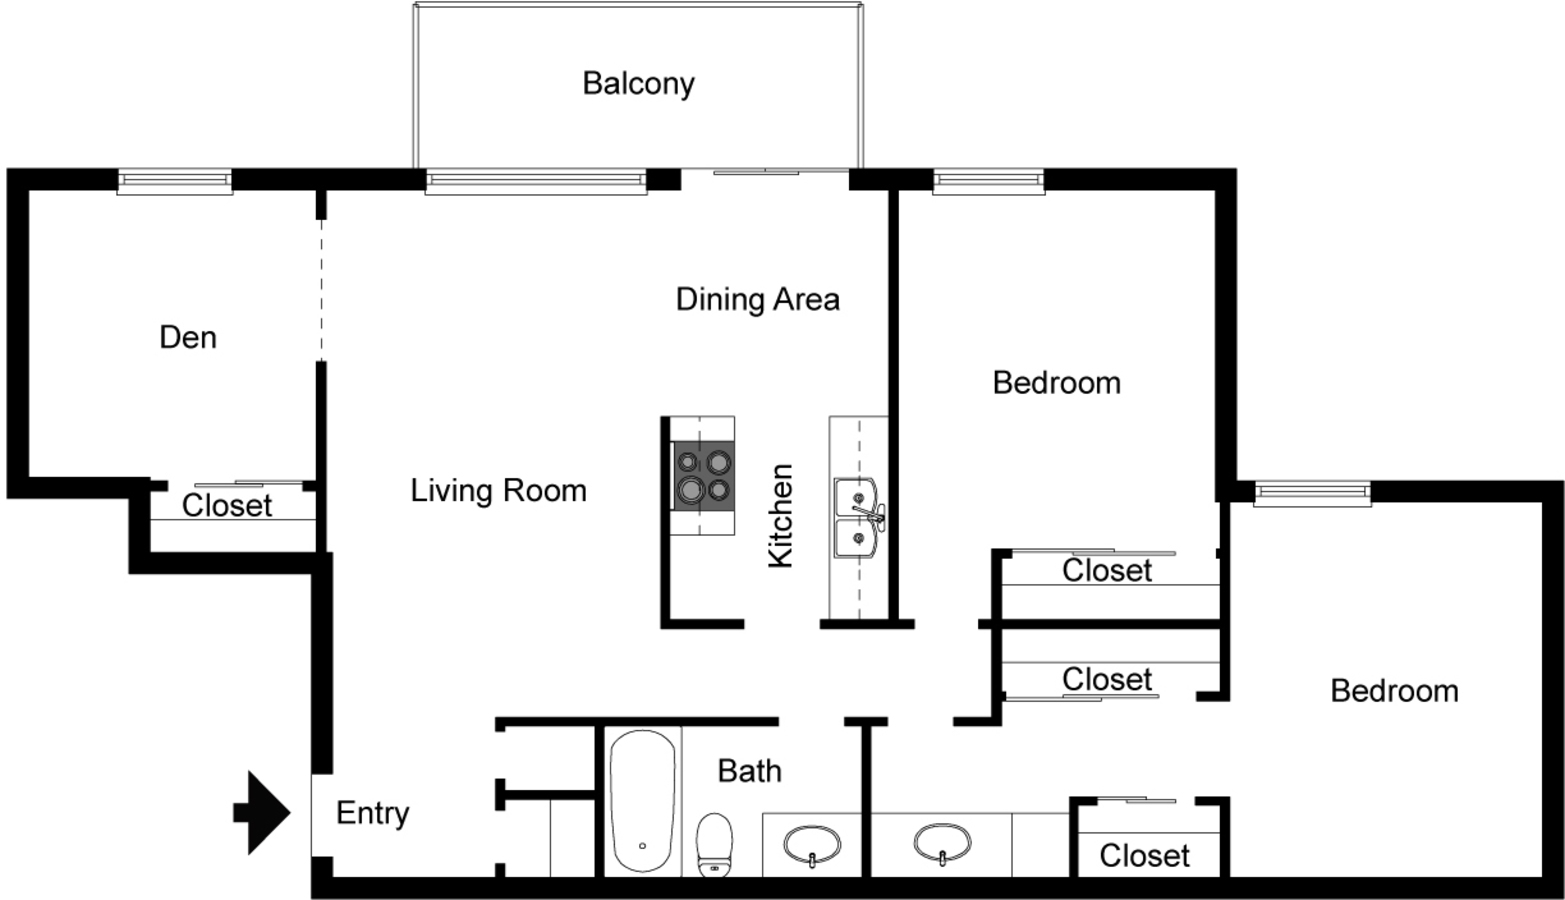 Two bedroom with a den floorplan.